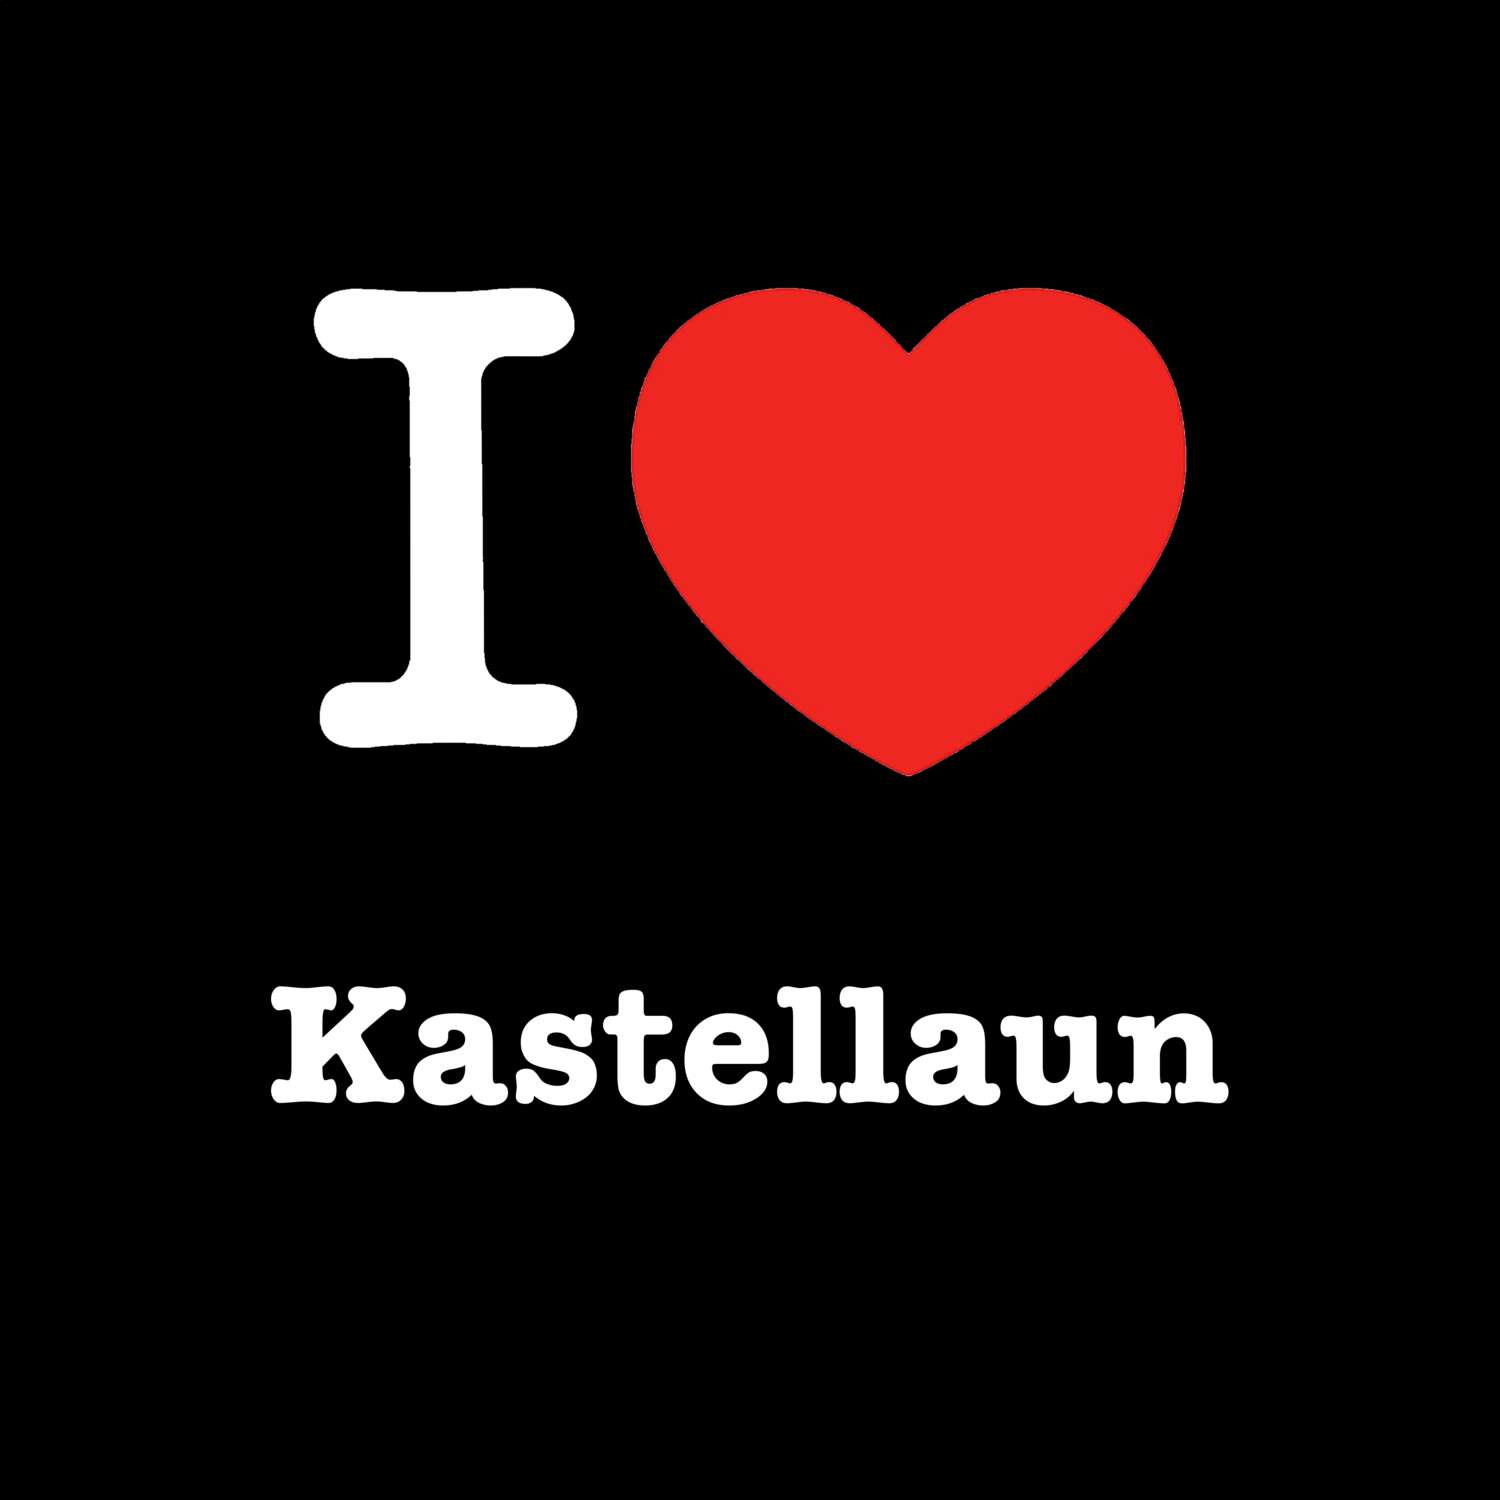 Kastellaun T-Shirt »I love«